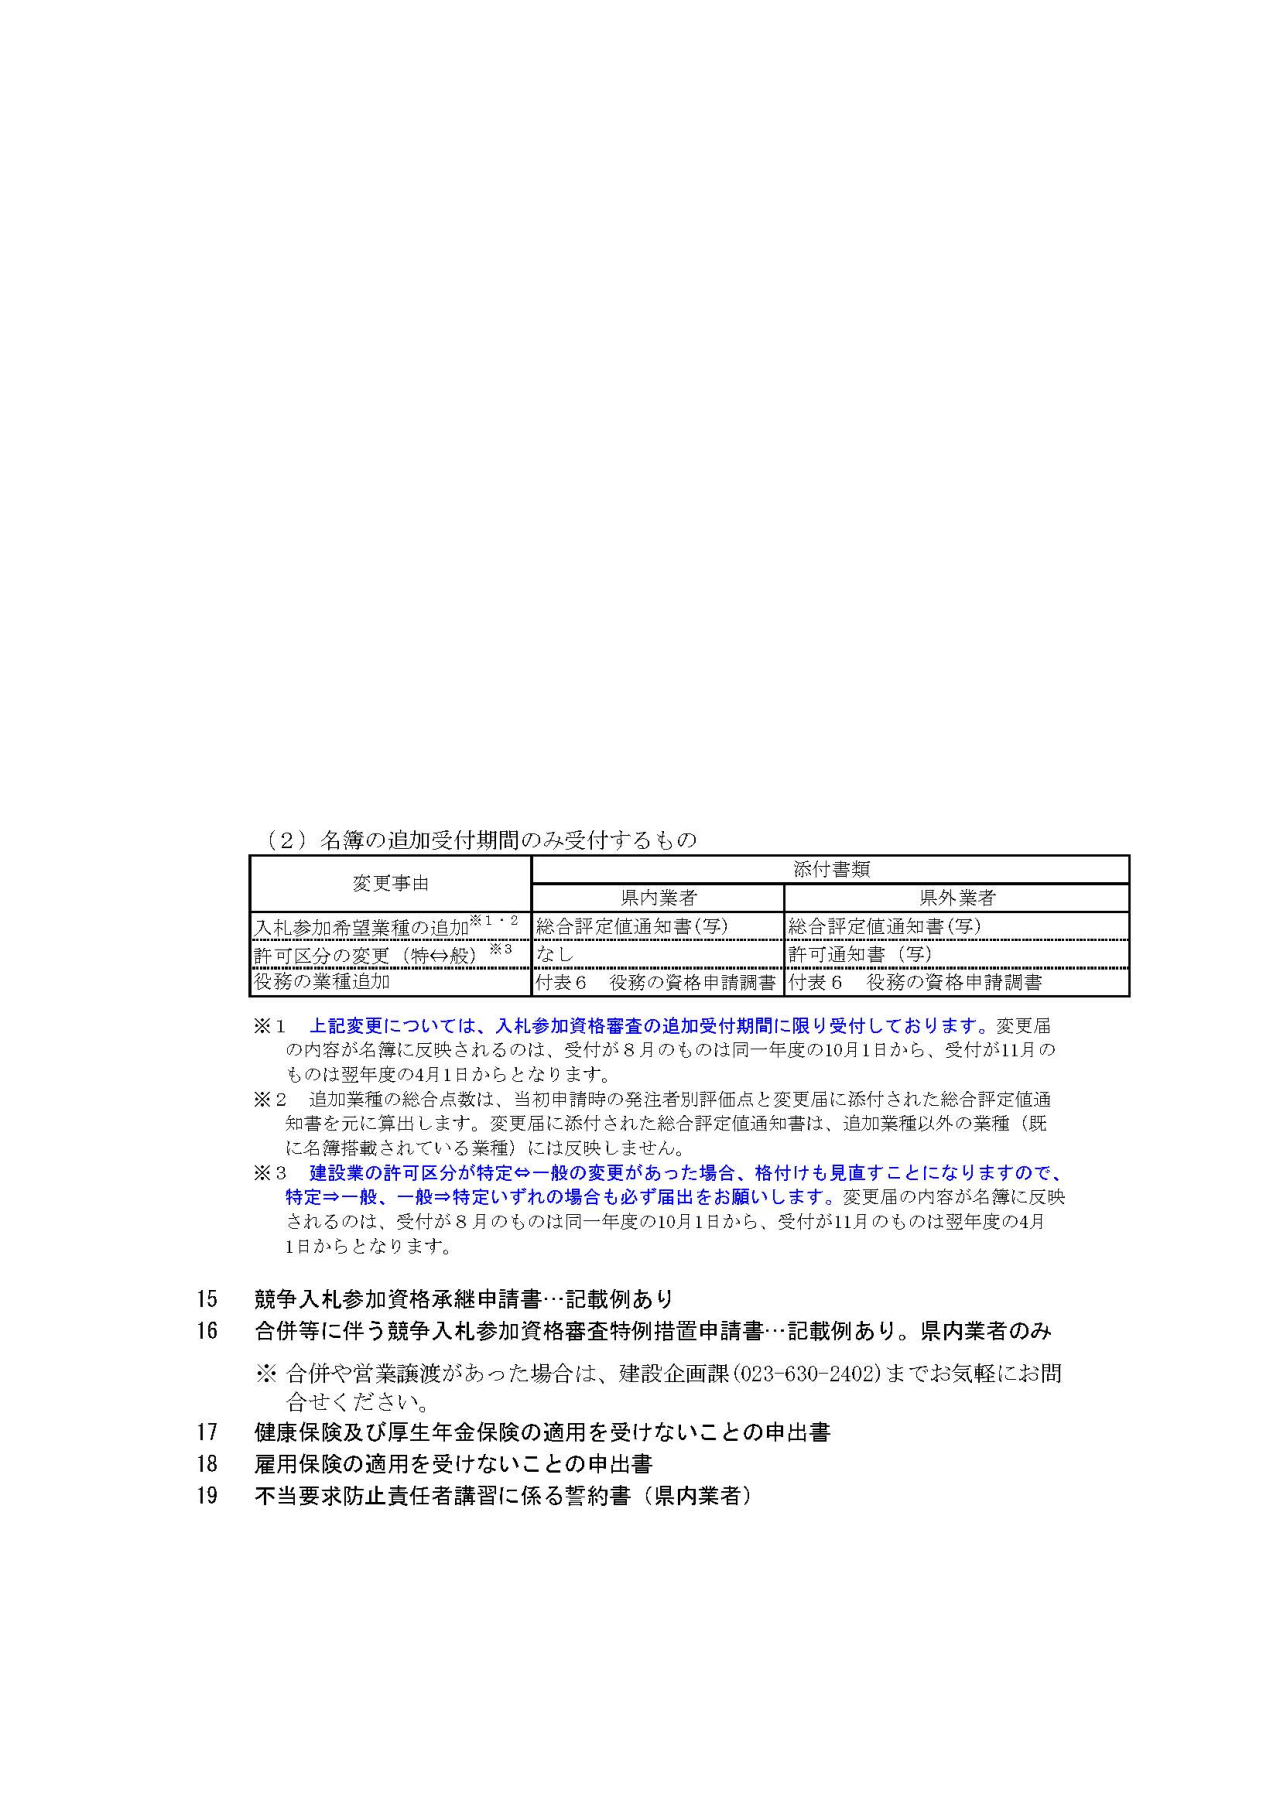 山形県入札参加資格審査申請_ページ_2